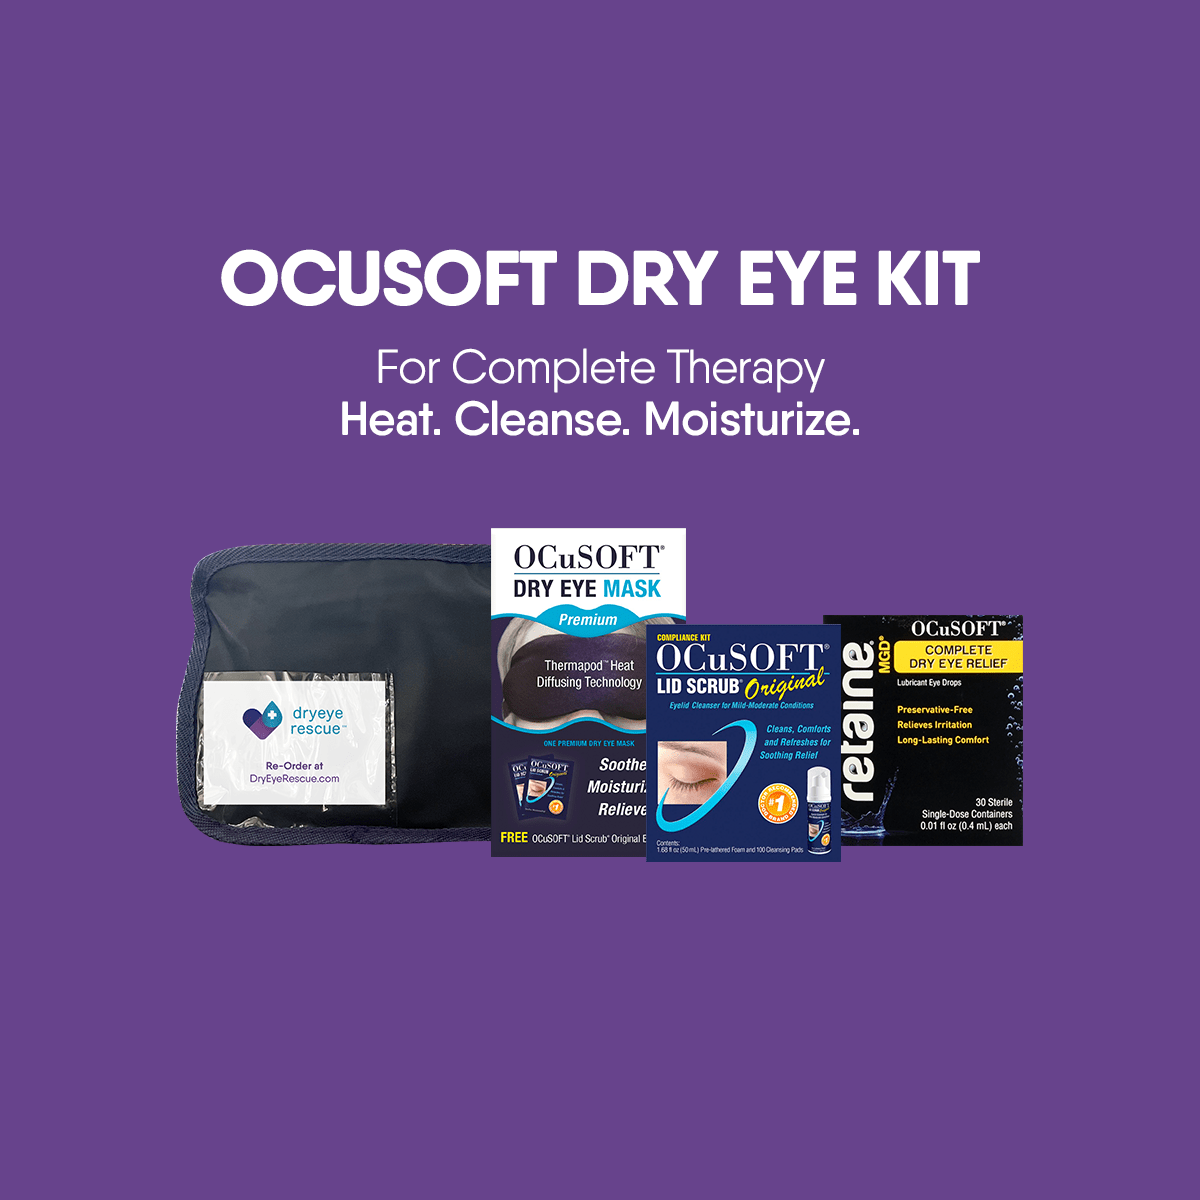 The Eyelid Scrub Kit